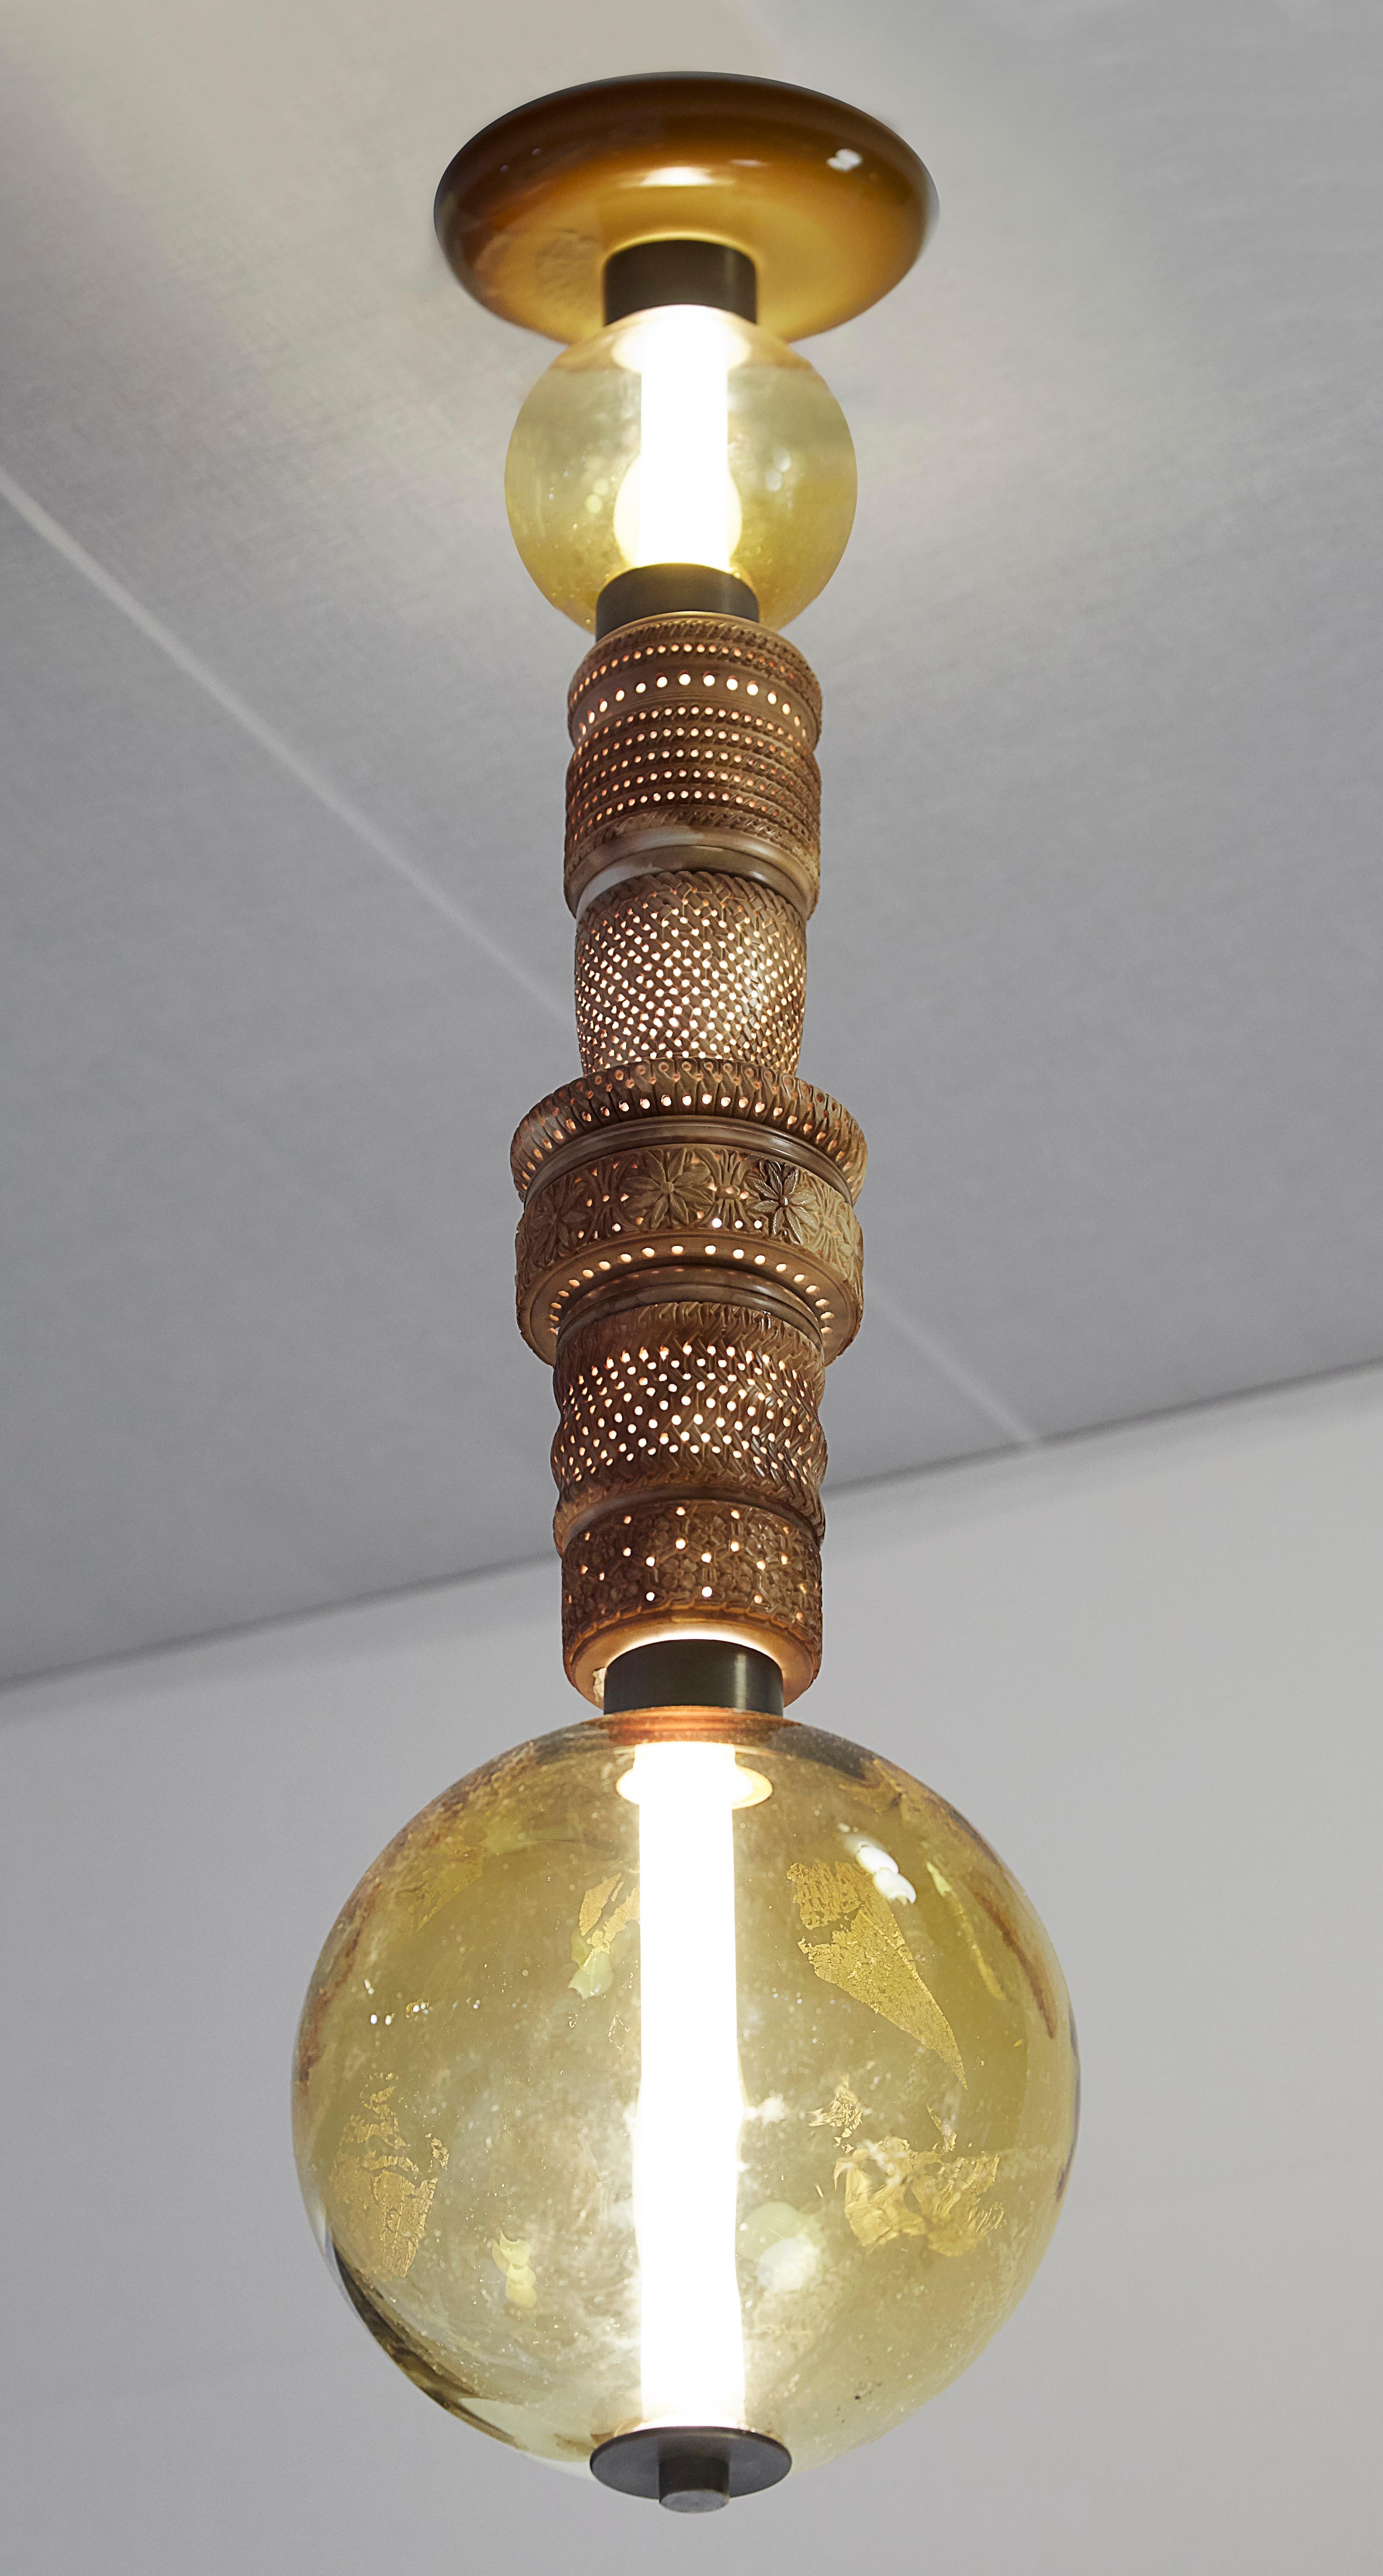 Feyza Kemahlioglu
Pillars of Meerschaum: Amber Treasure, 2018
Meerschaum, blown glass, brass, gold leaf, and LEDs
Measures: 8 x 8 x 40 in.